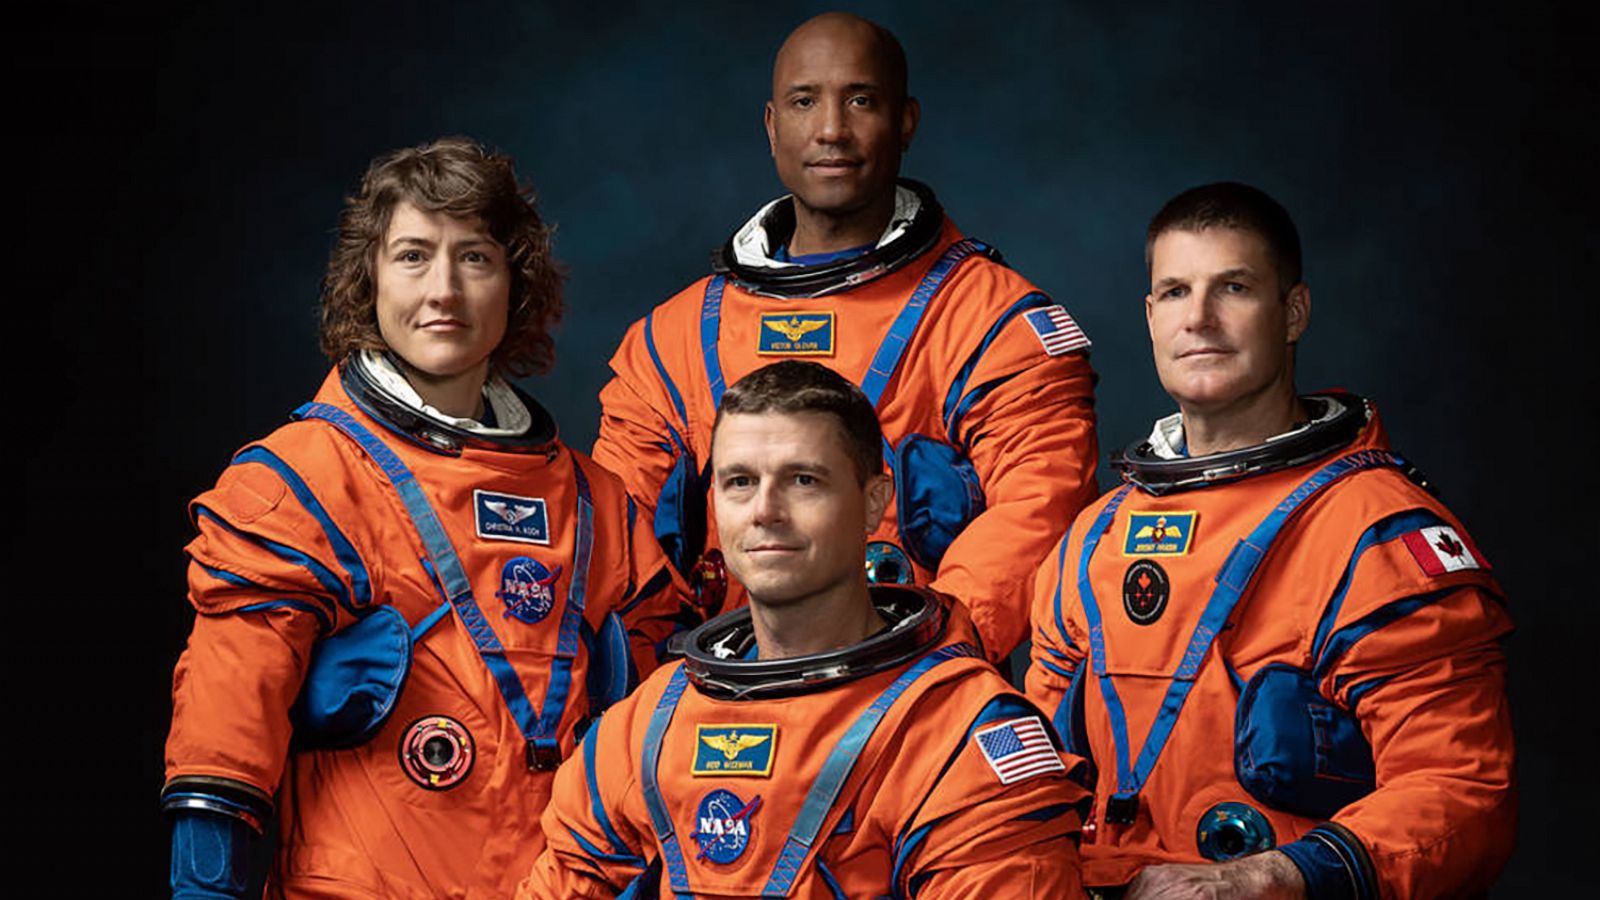 NASA announces 4 astronauts who will travel around the moon on